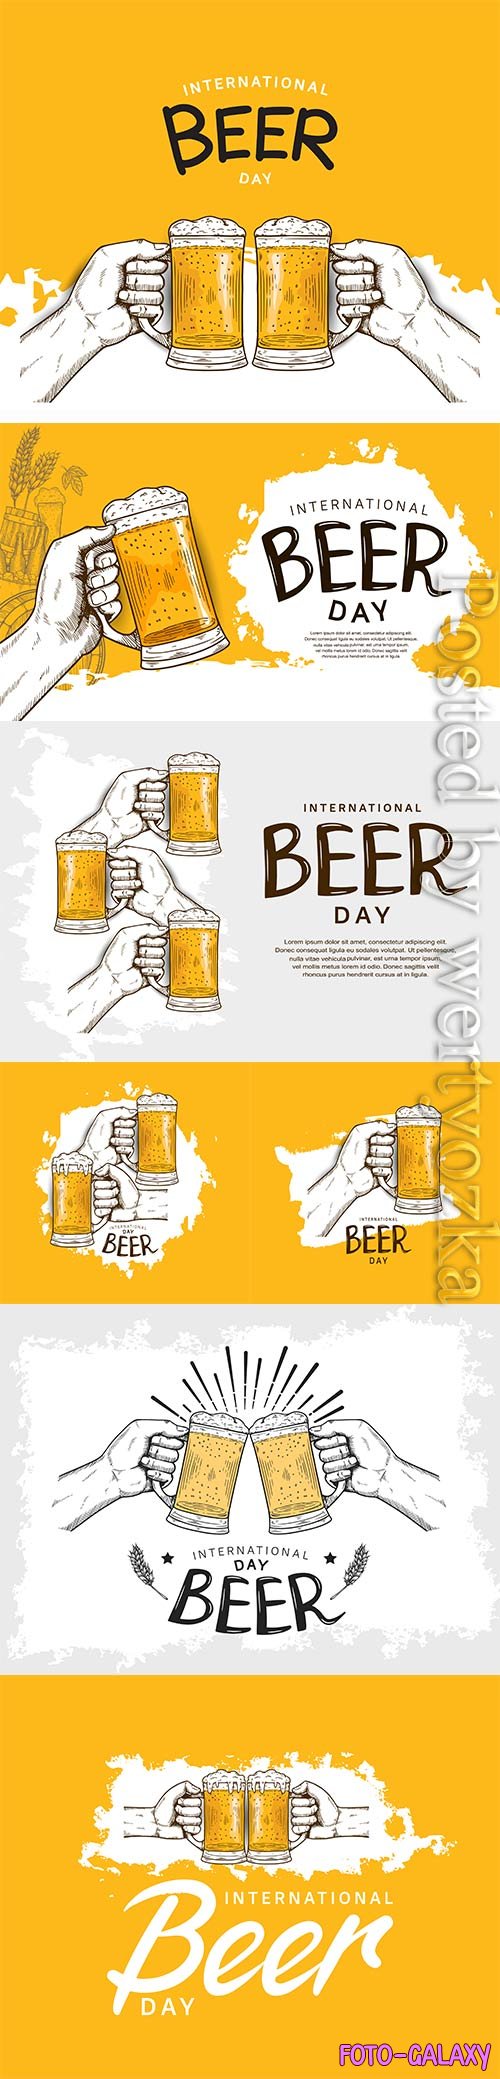 International beer day illustration vector design template